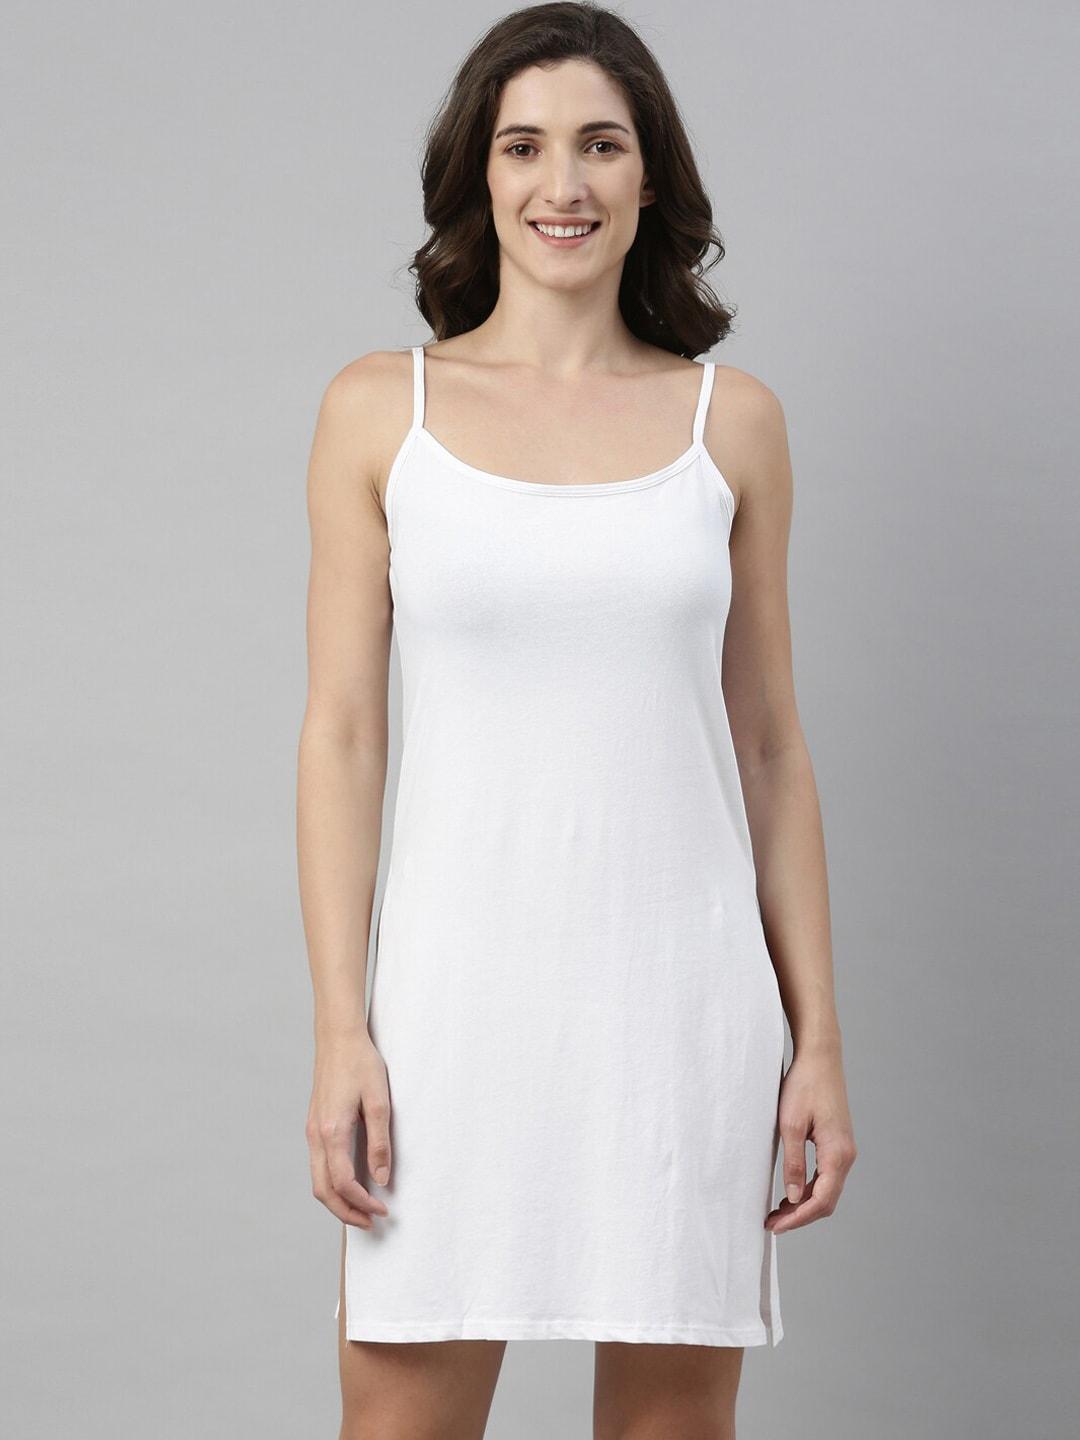 enamor-women-white-solid-camisole-dress